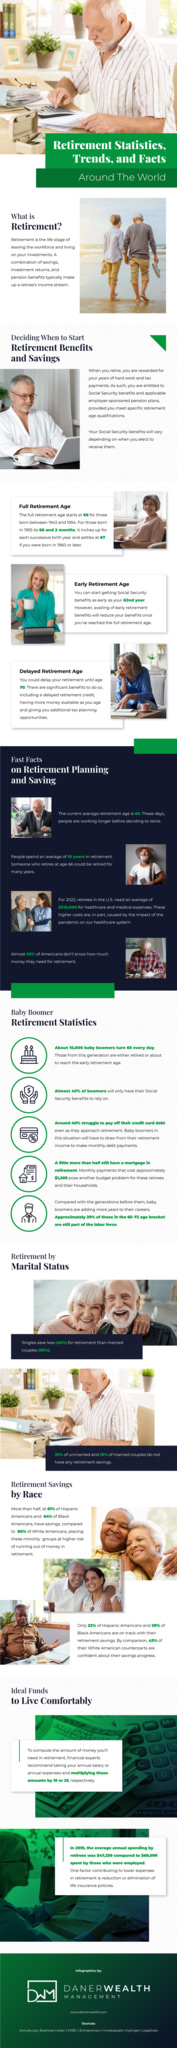 retirement statistics infographic